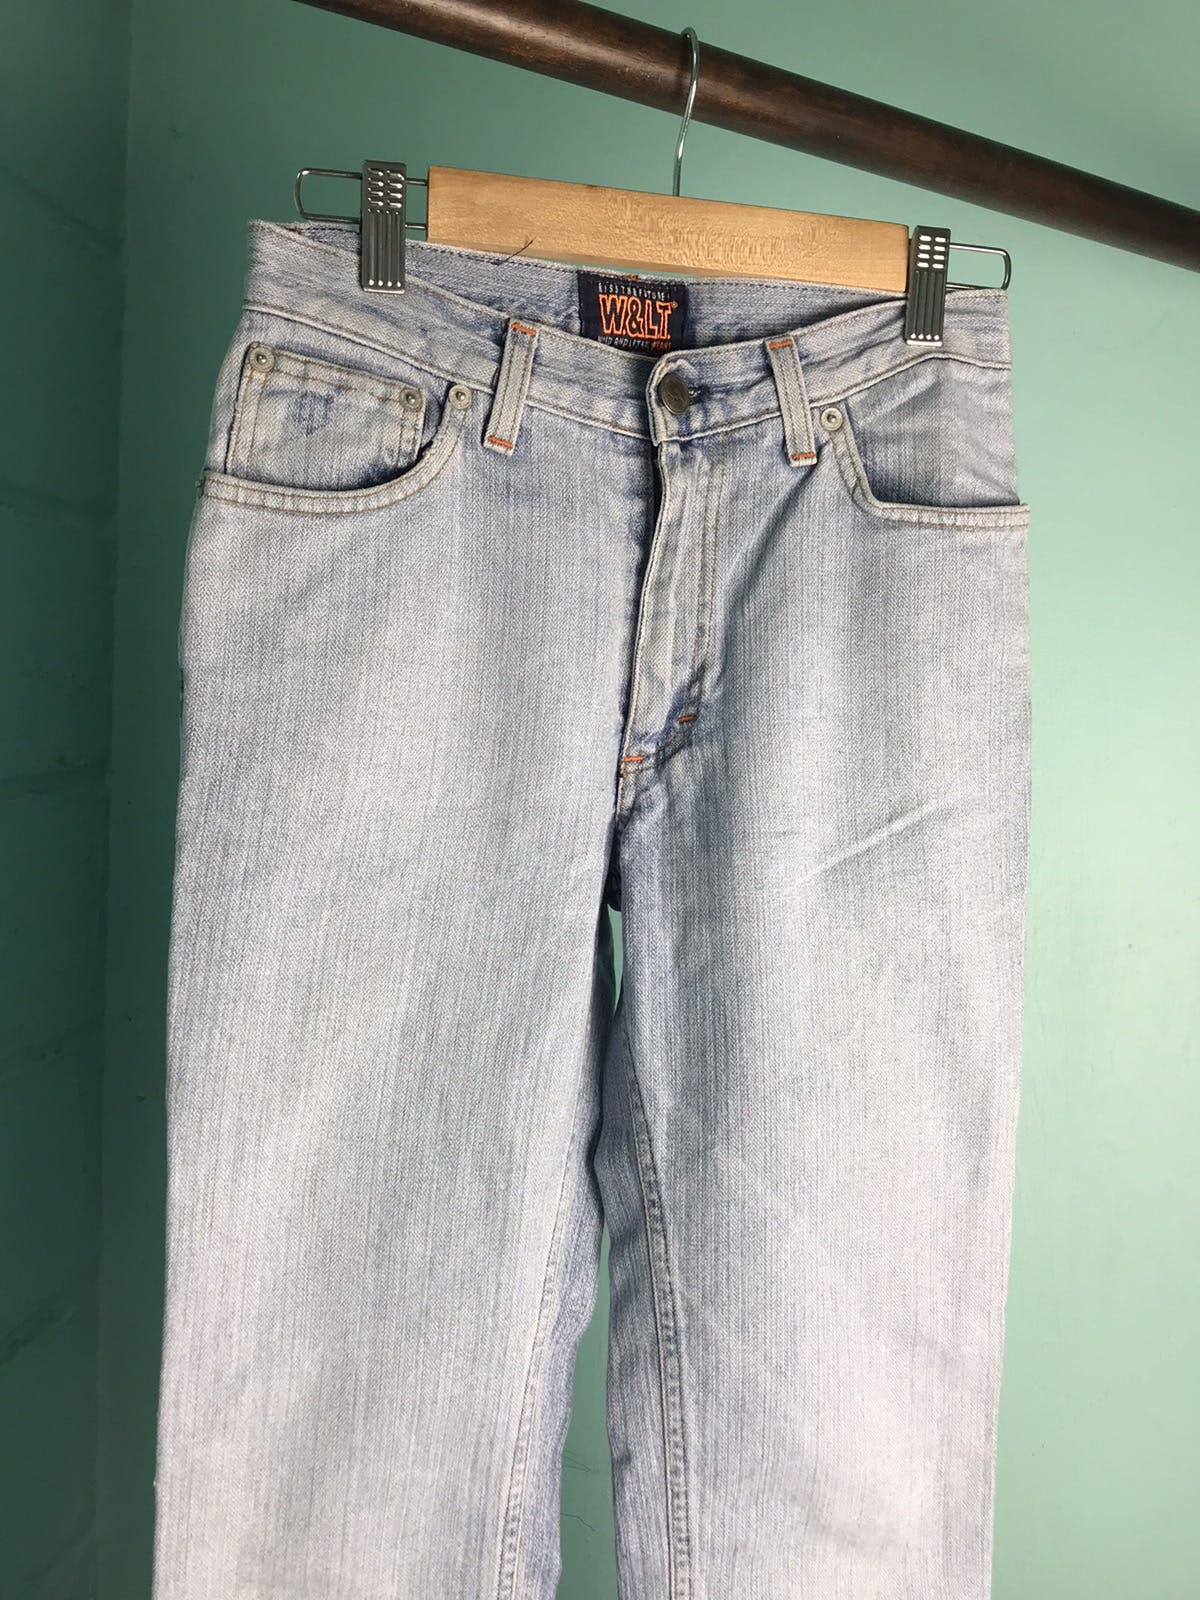 Vintage W&lt Denim Jeans - 4